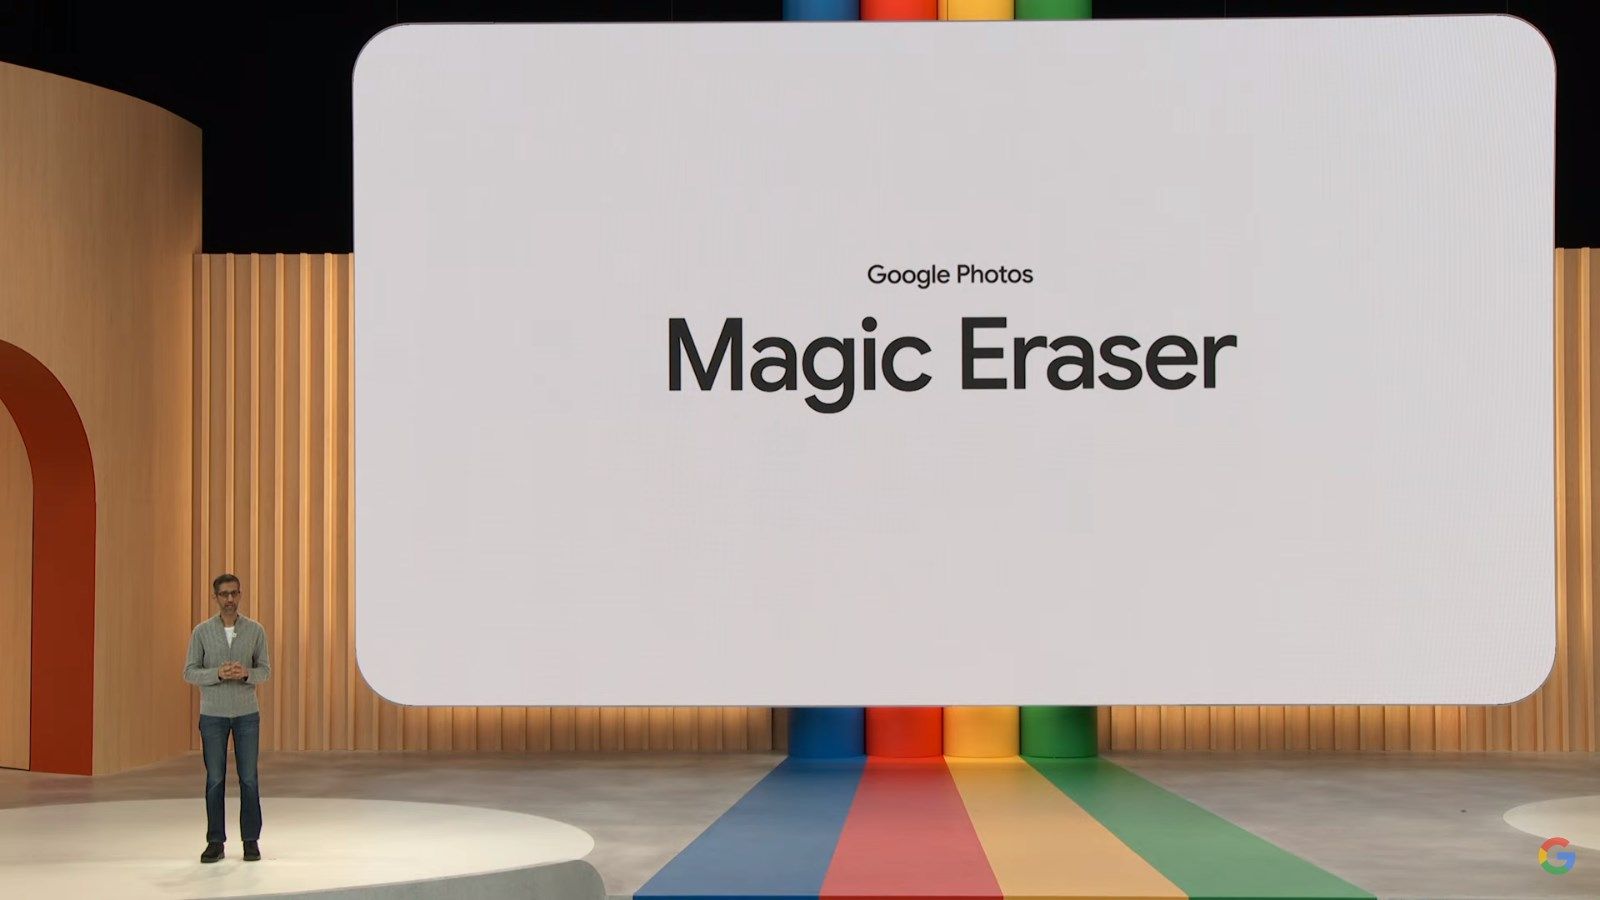 Magic Eraser in Google Photos